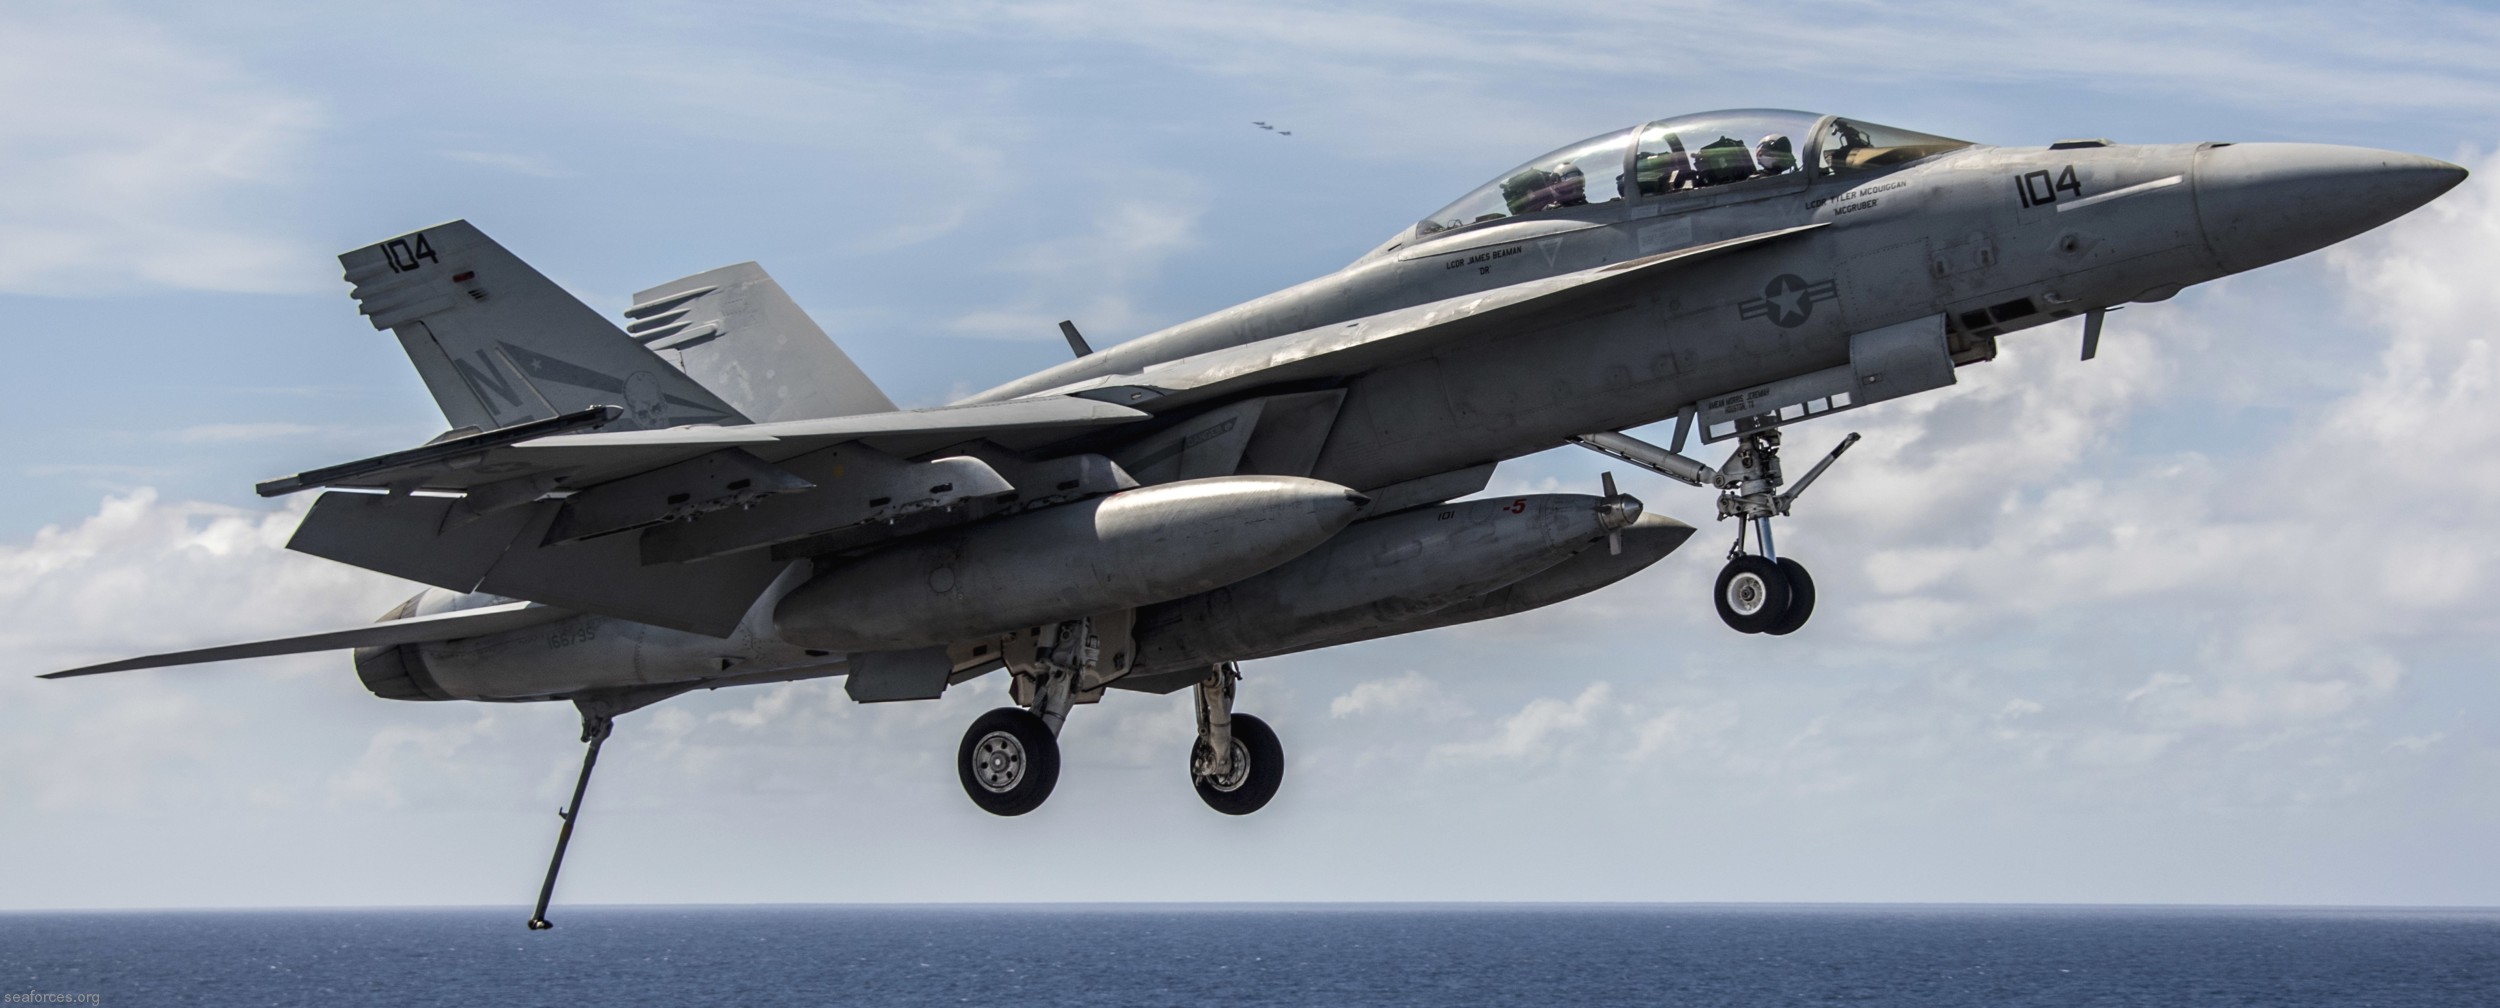 vfa-2 bounty hunters strike fighter squadron us navy f/a-18f super hornet carrier air wing cvw-2 uss carl vinson cvn-70 04